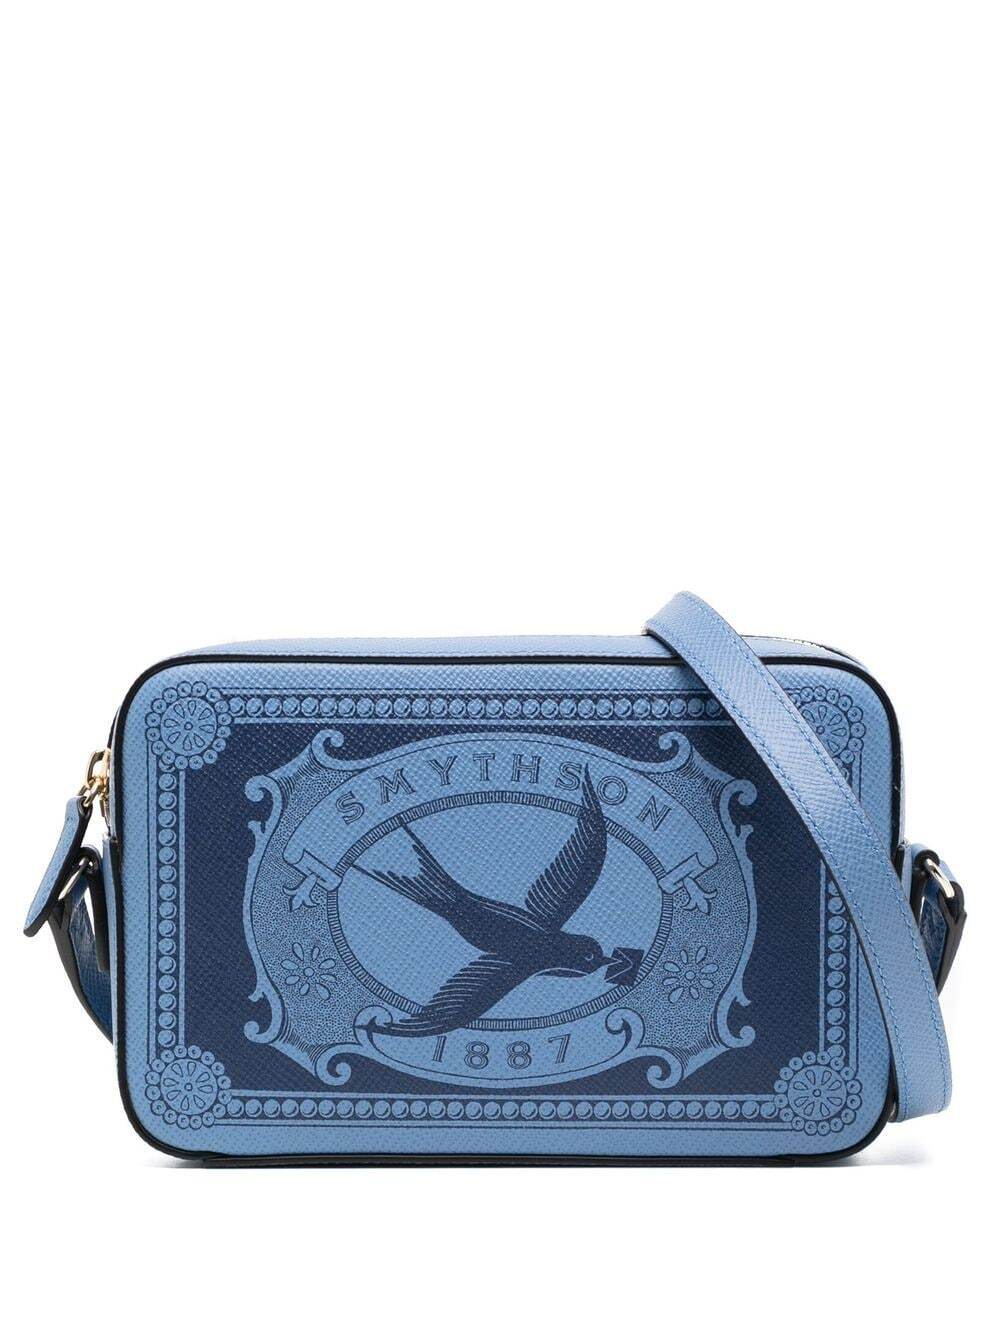 Smythson logo leather camera bag - Blue